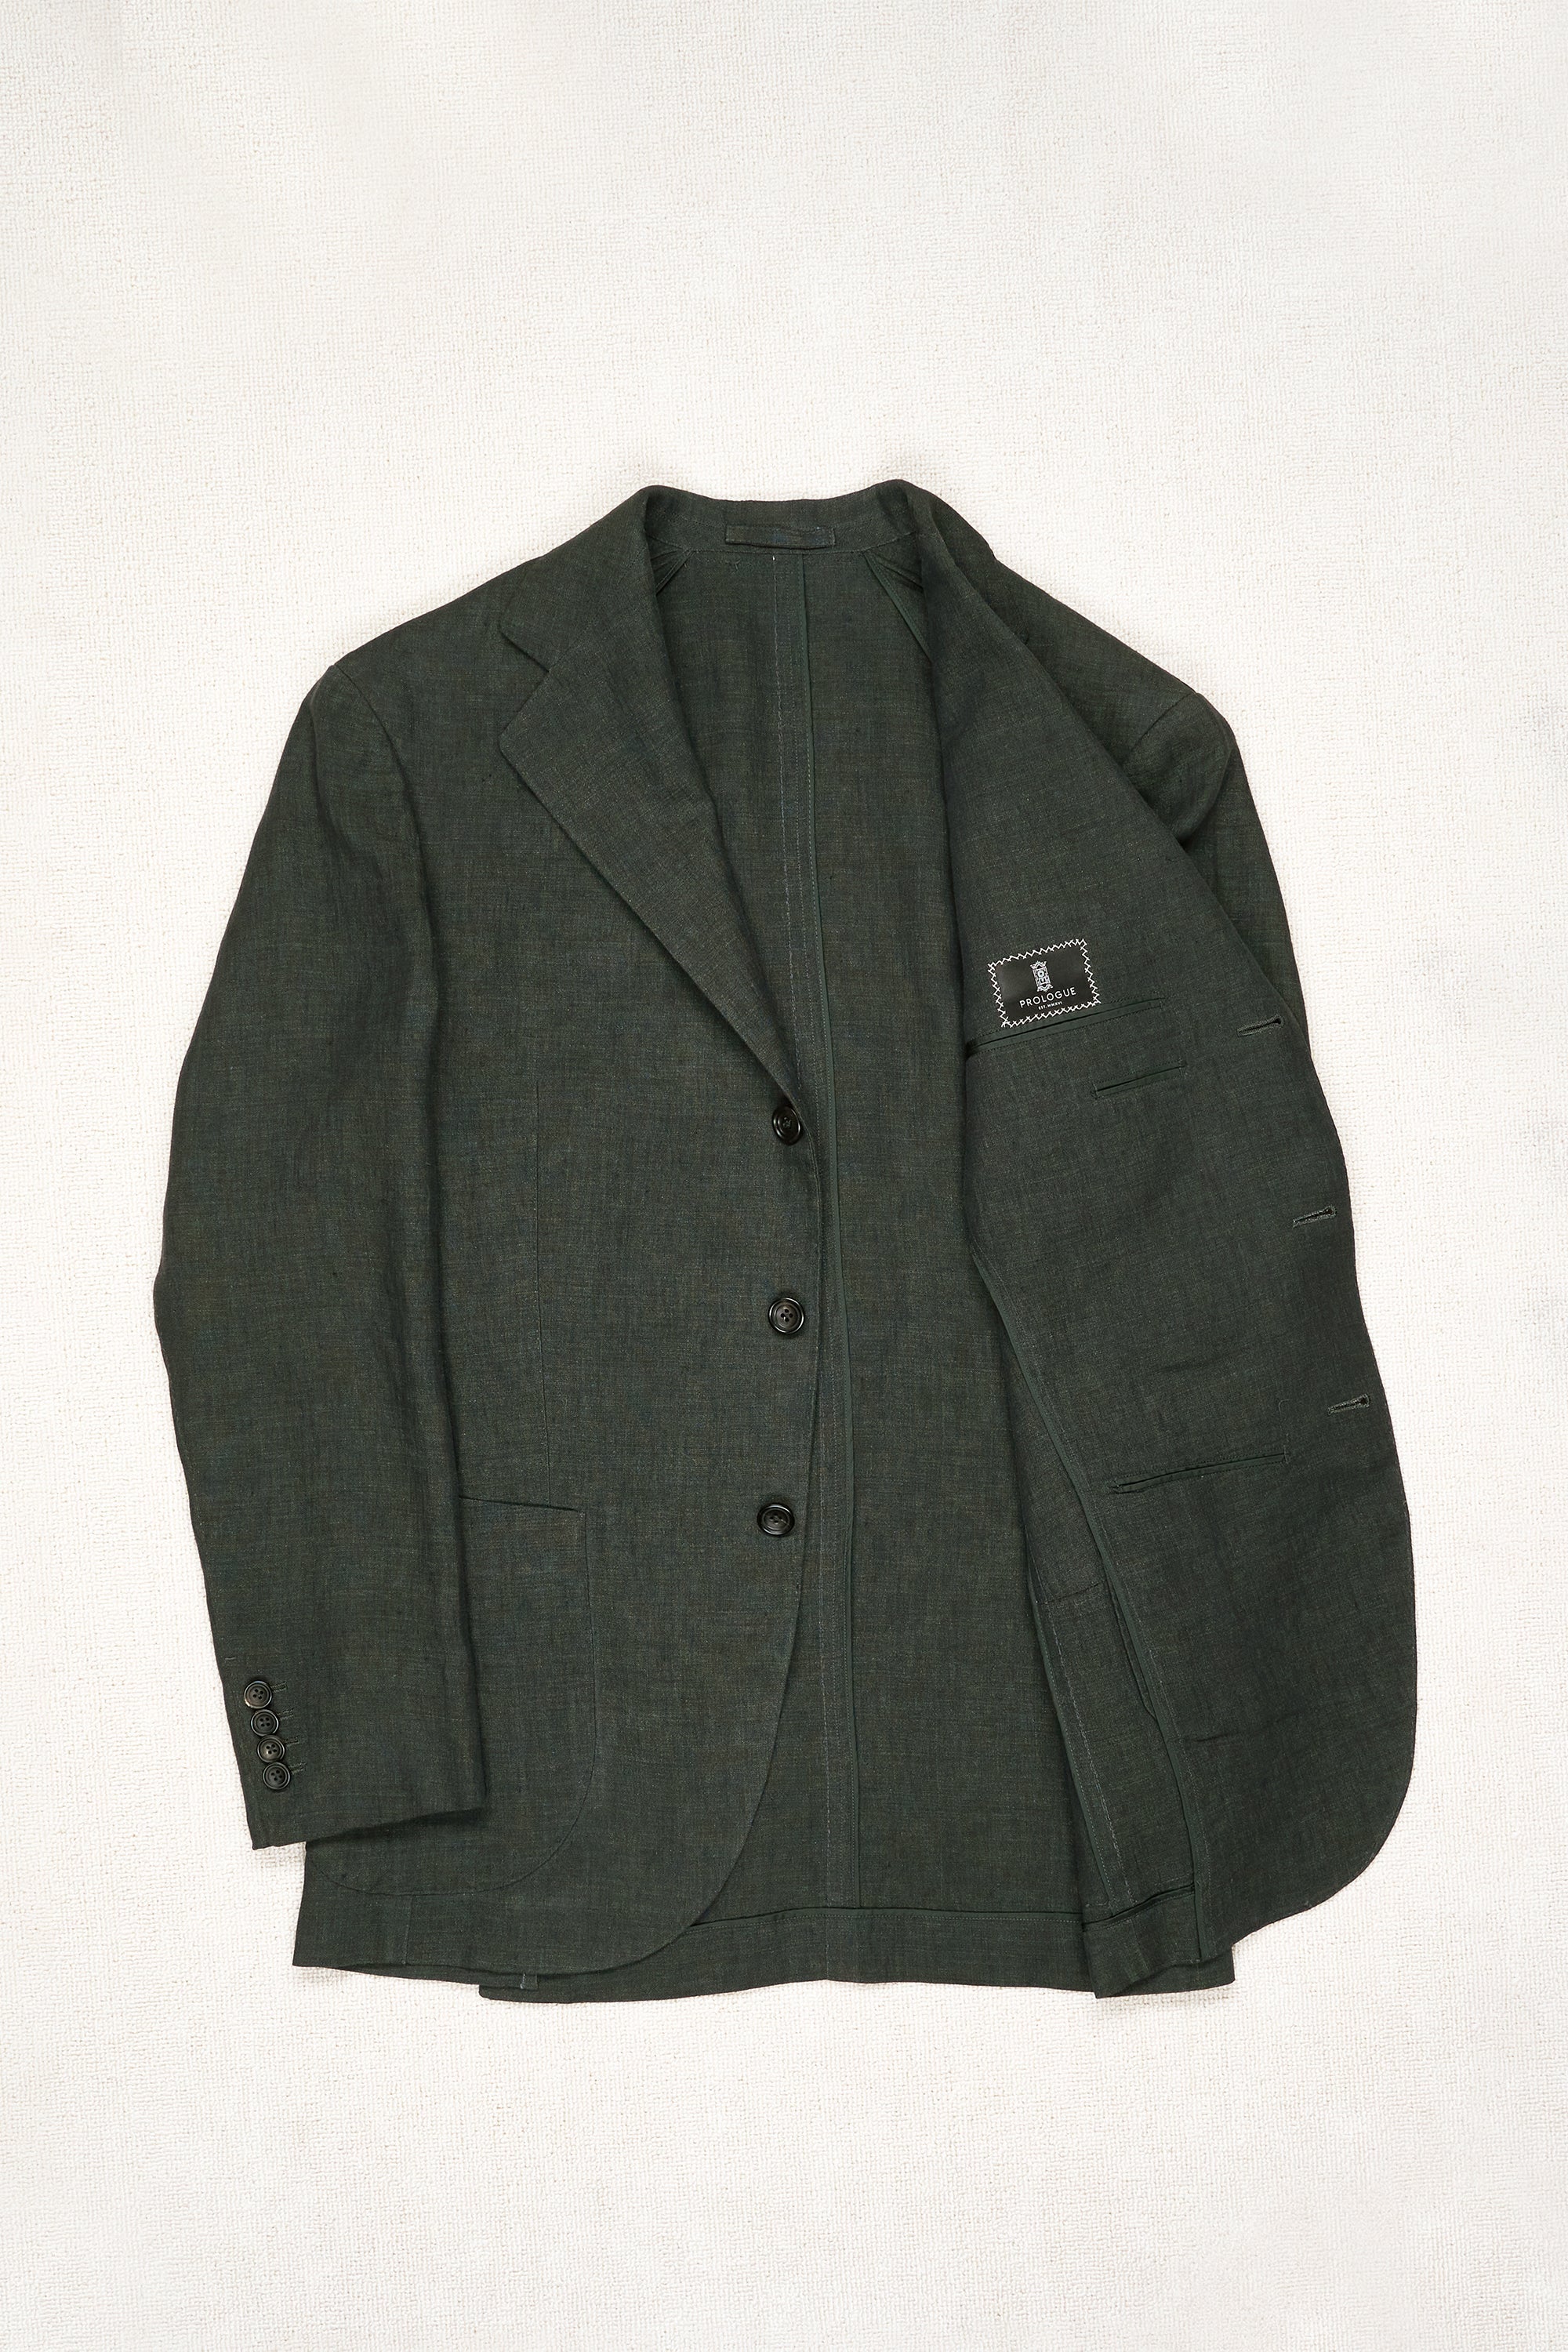 Prologue Dark Green Linen Sport Coat